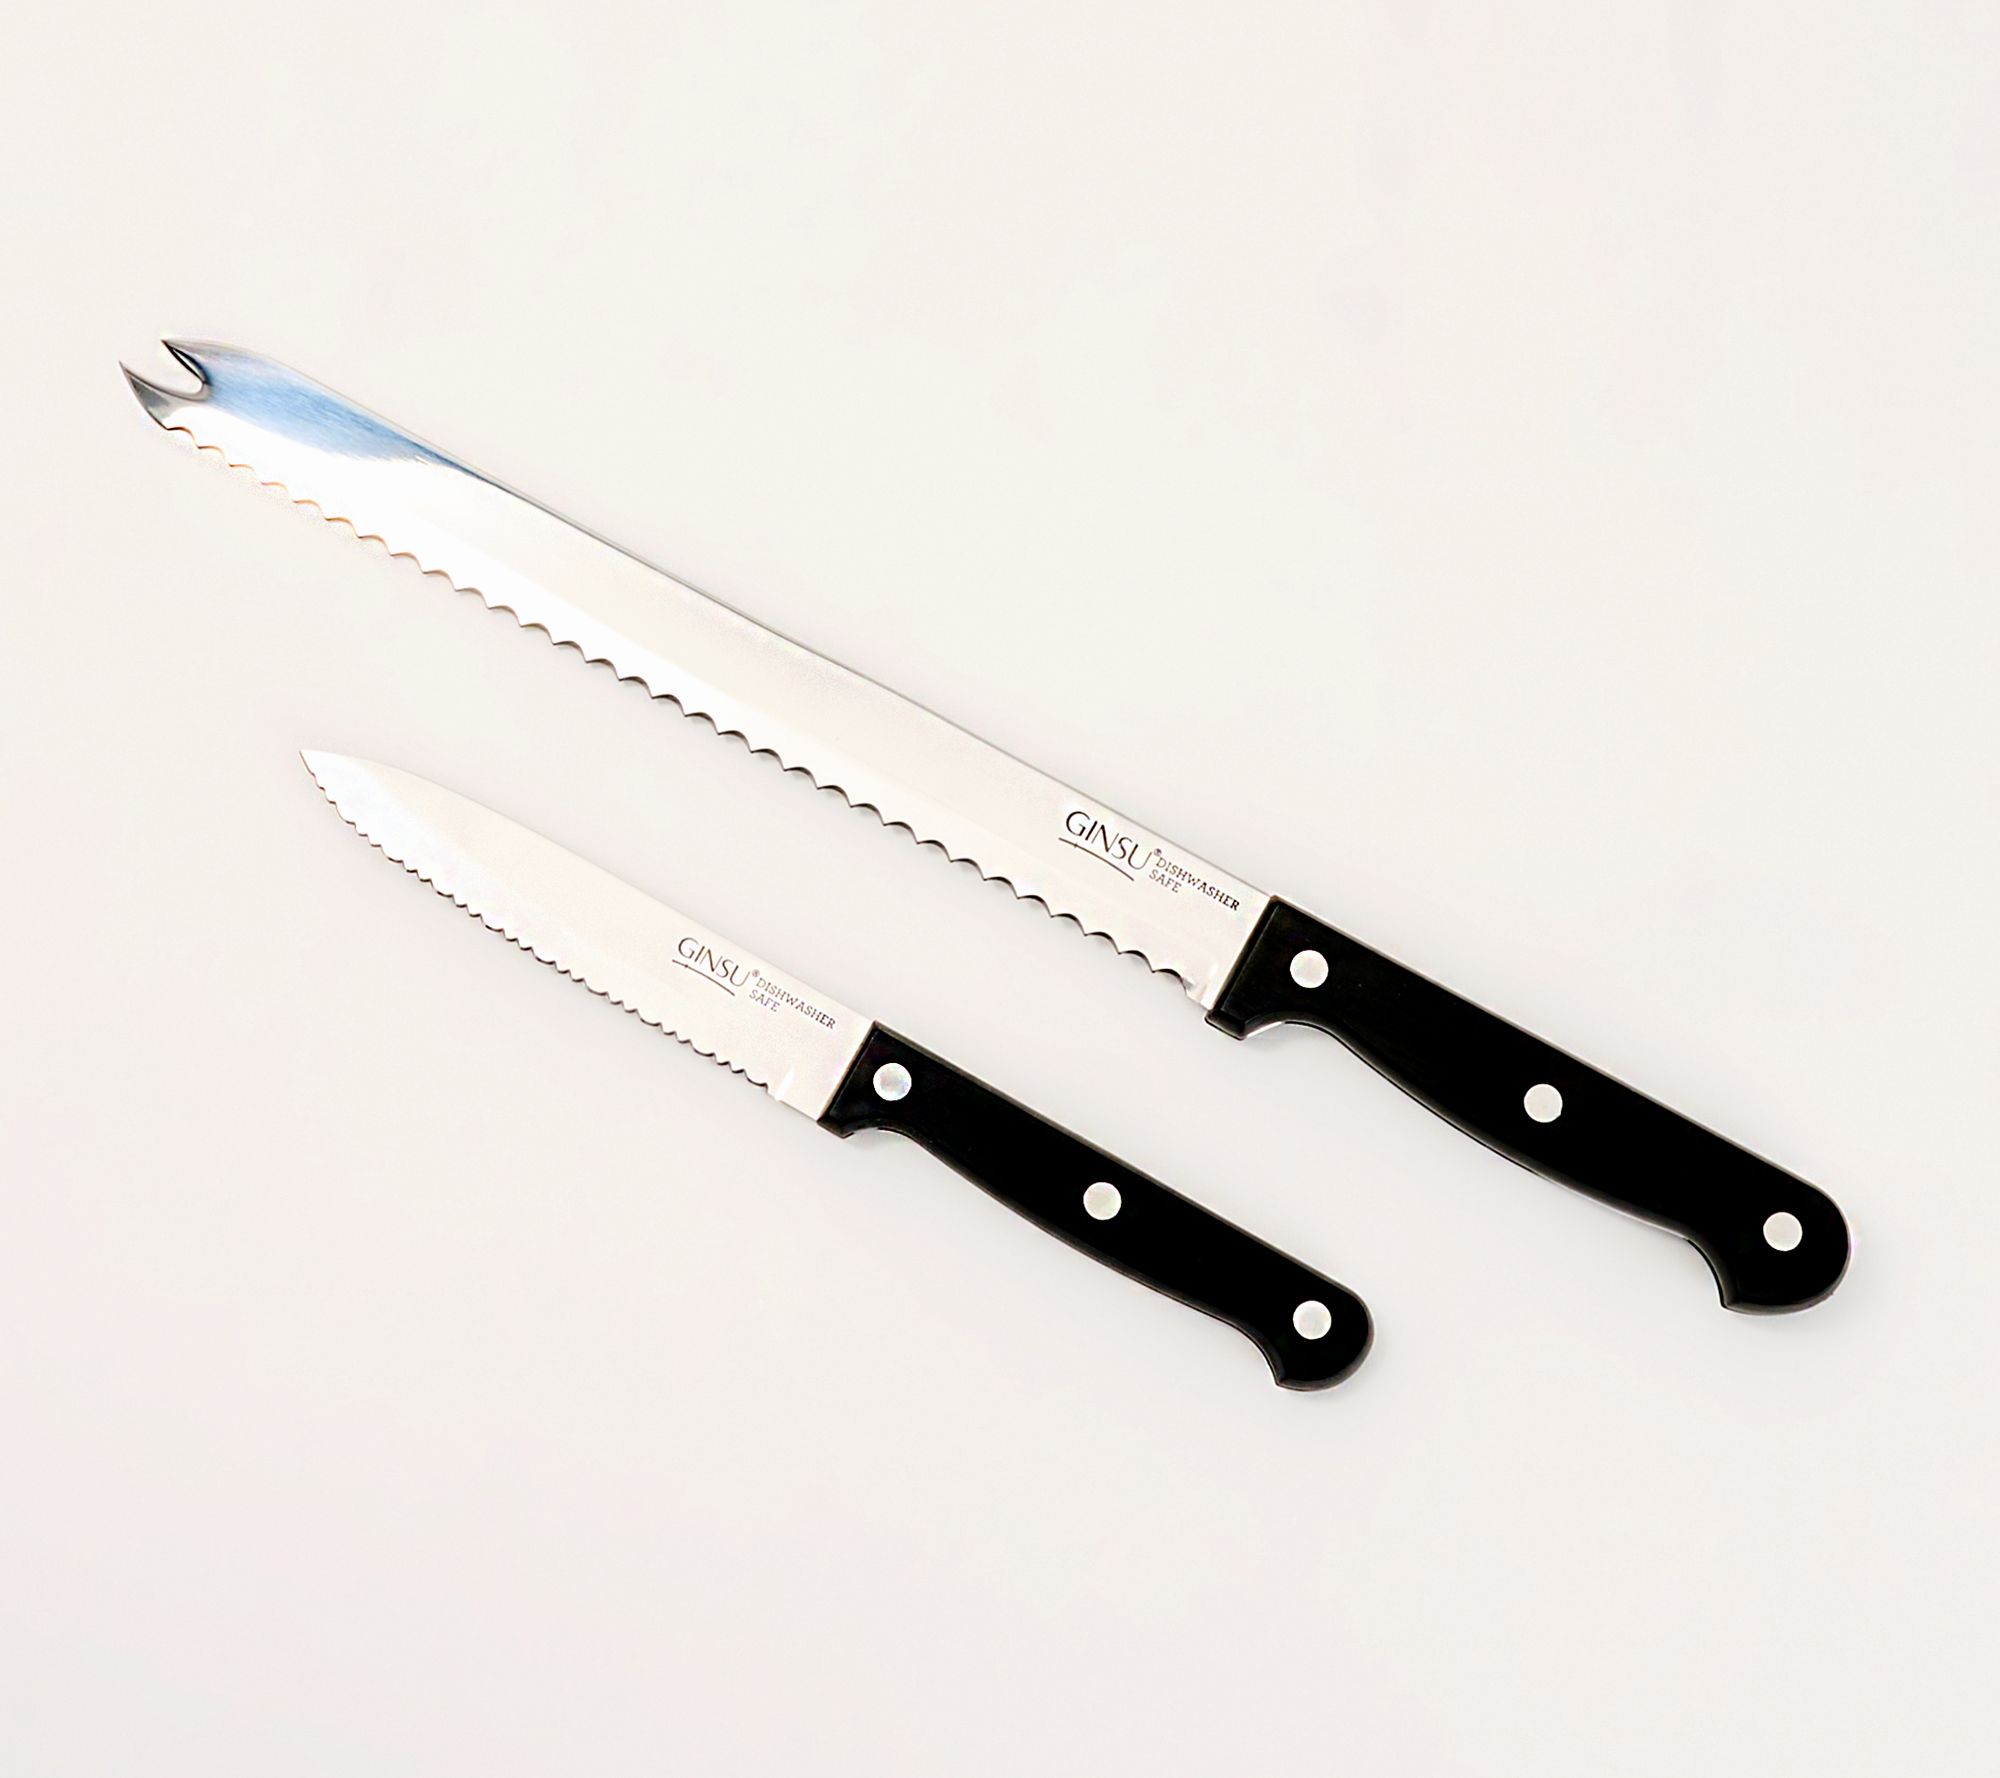 13 Pc Hobby Knife Set 2 Sets Free Shipping